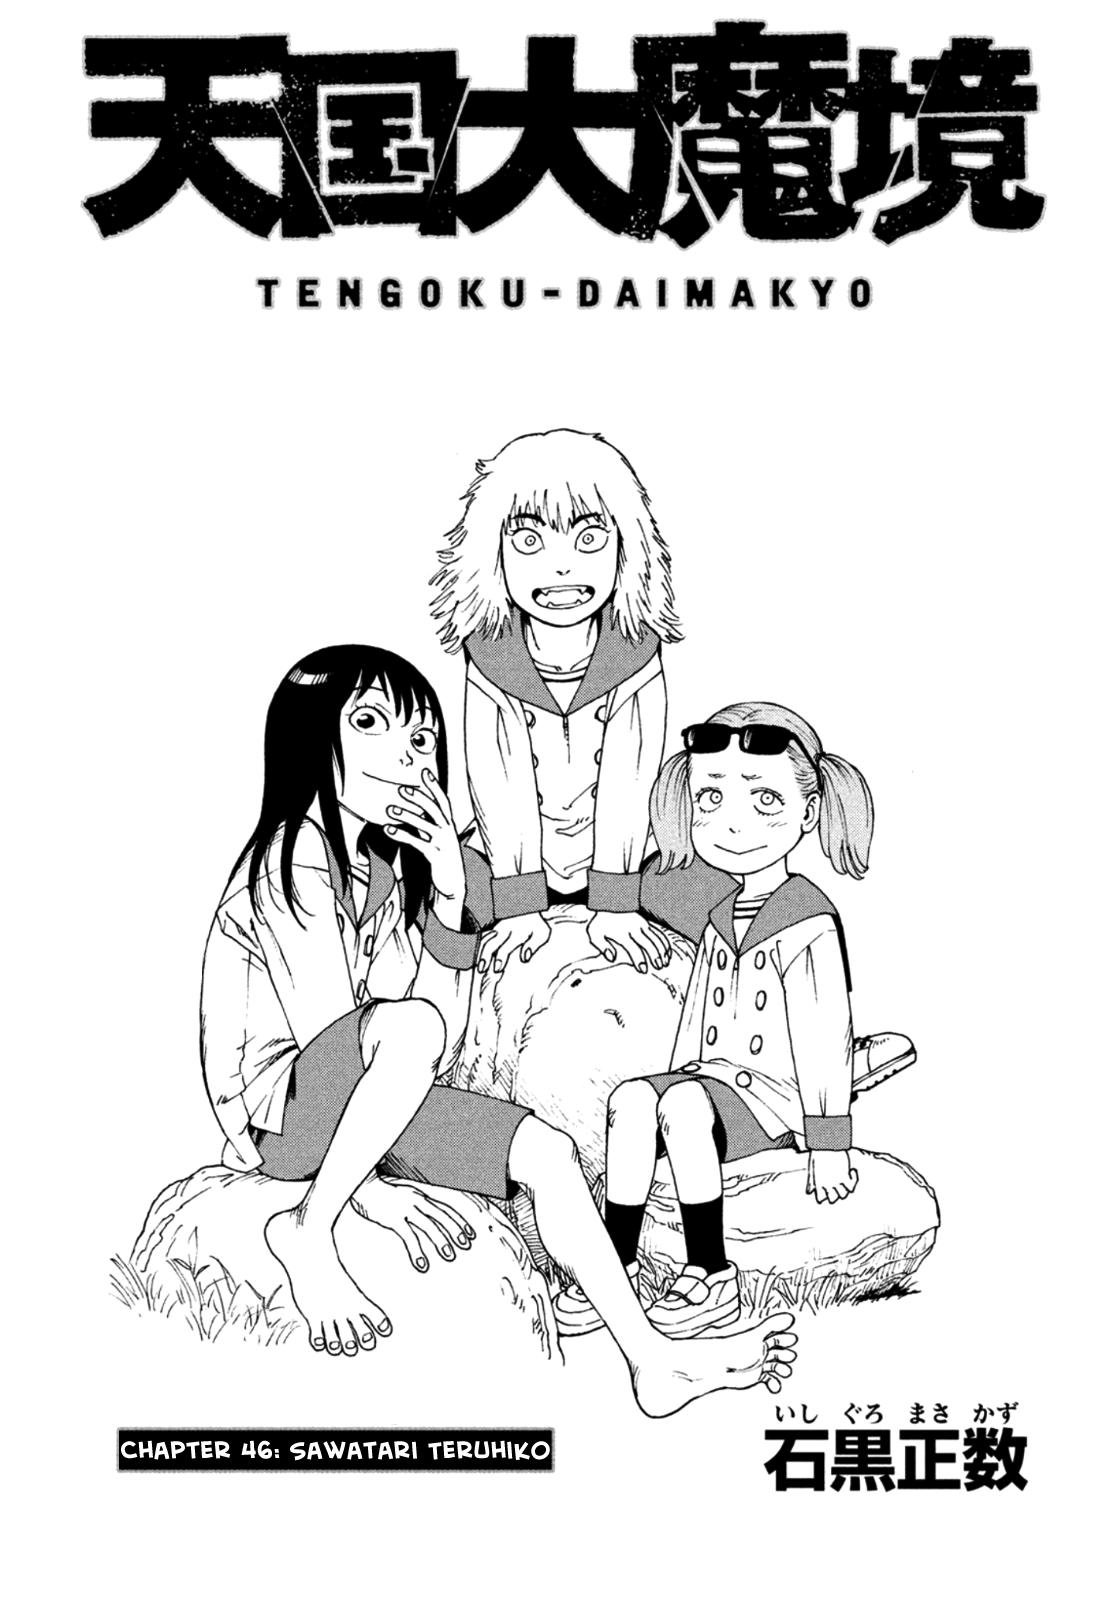 Read Tengoku Daimakyou Chapter 34: Inazaki Robin ➂ - Manganelo